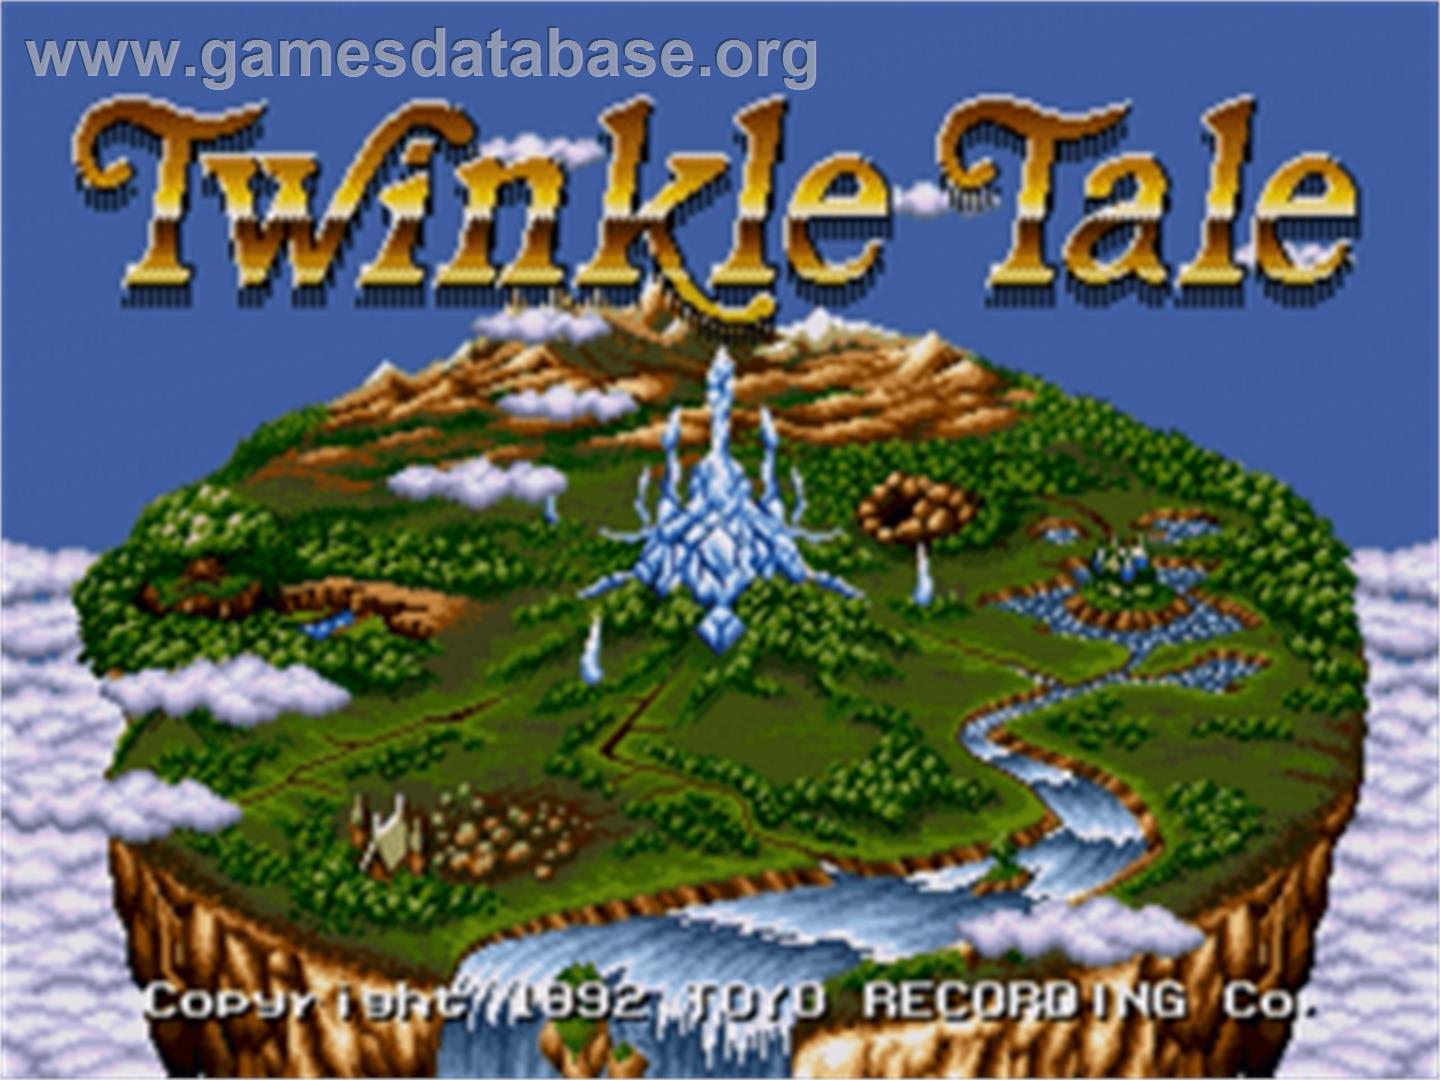 Twinkle Tale - Sega Nomad - Artwork - Title Screen